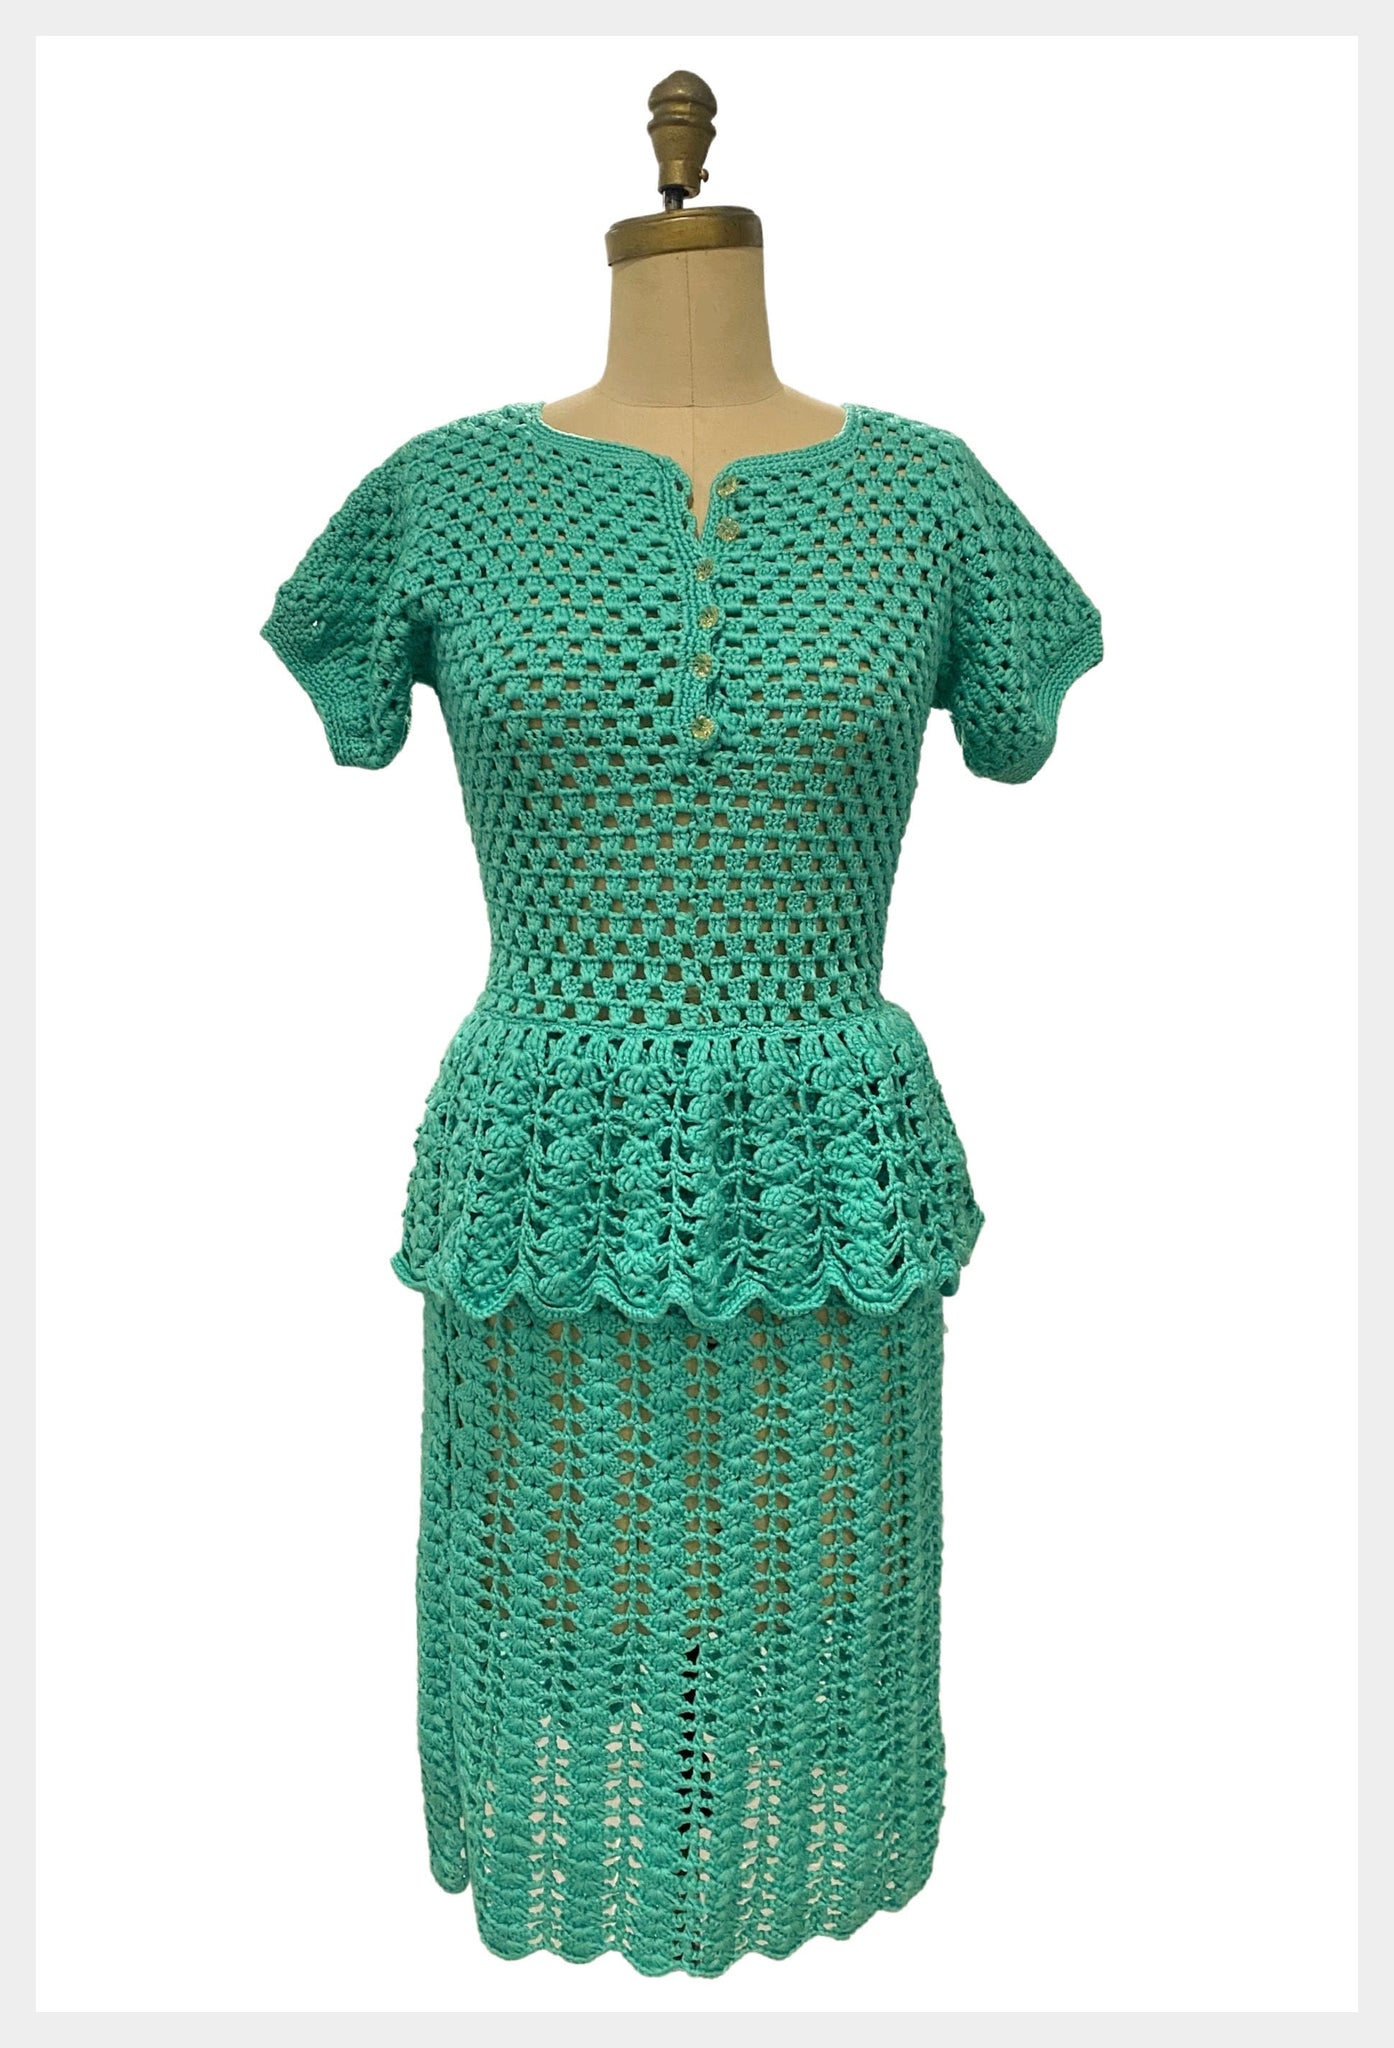 Vintage green hand crochet 40s style lace crochet dress